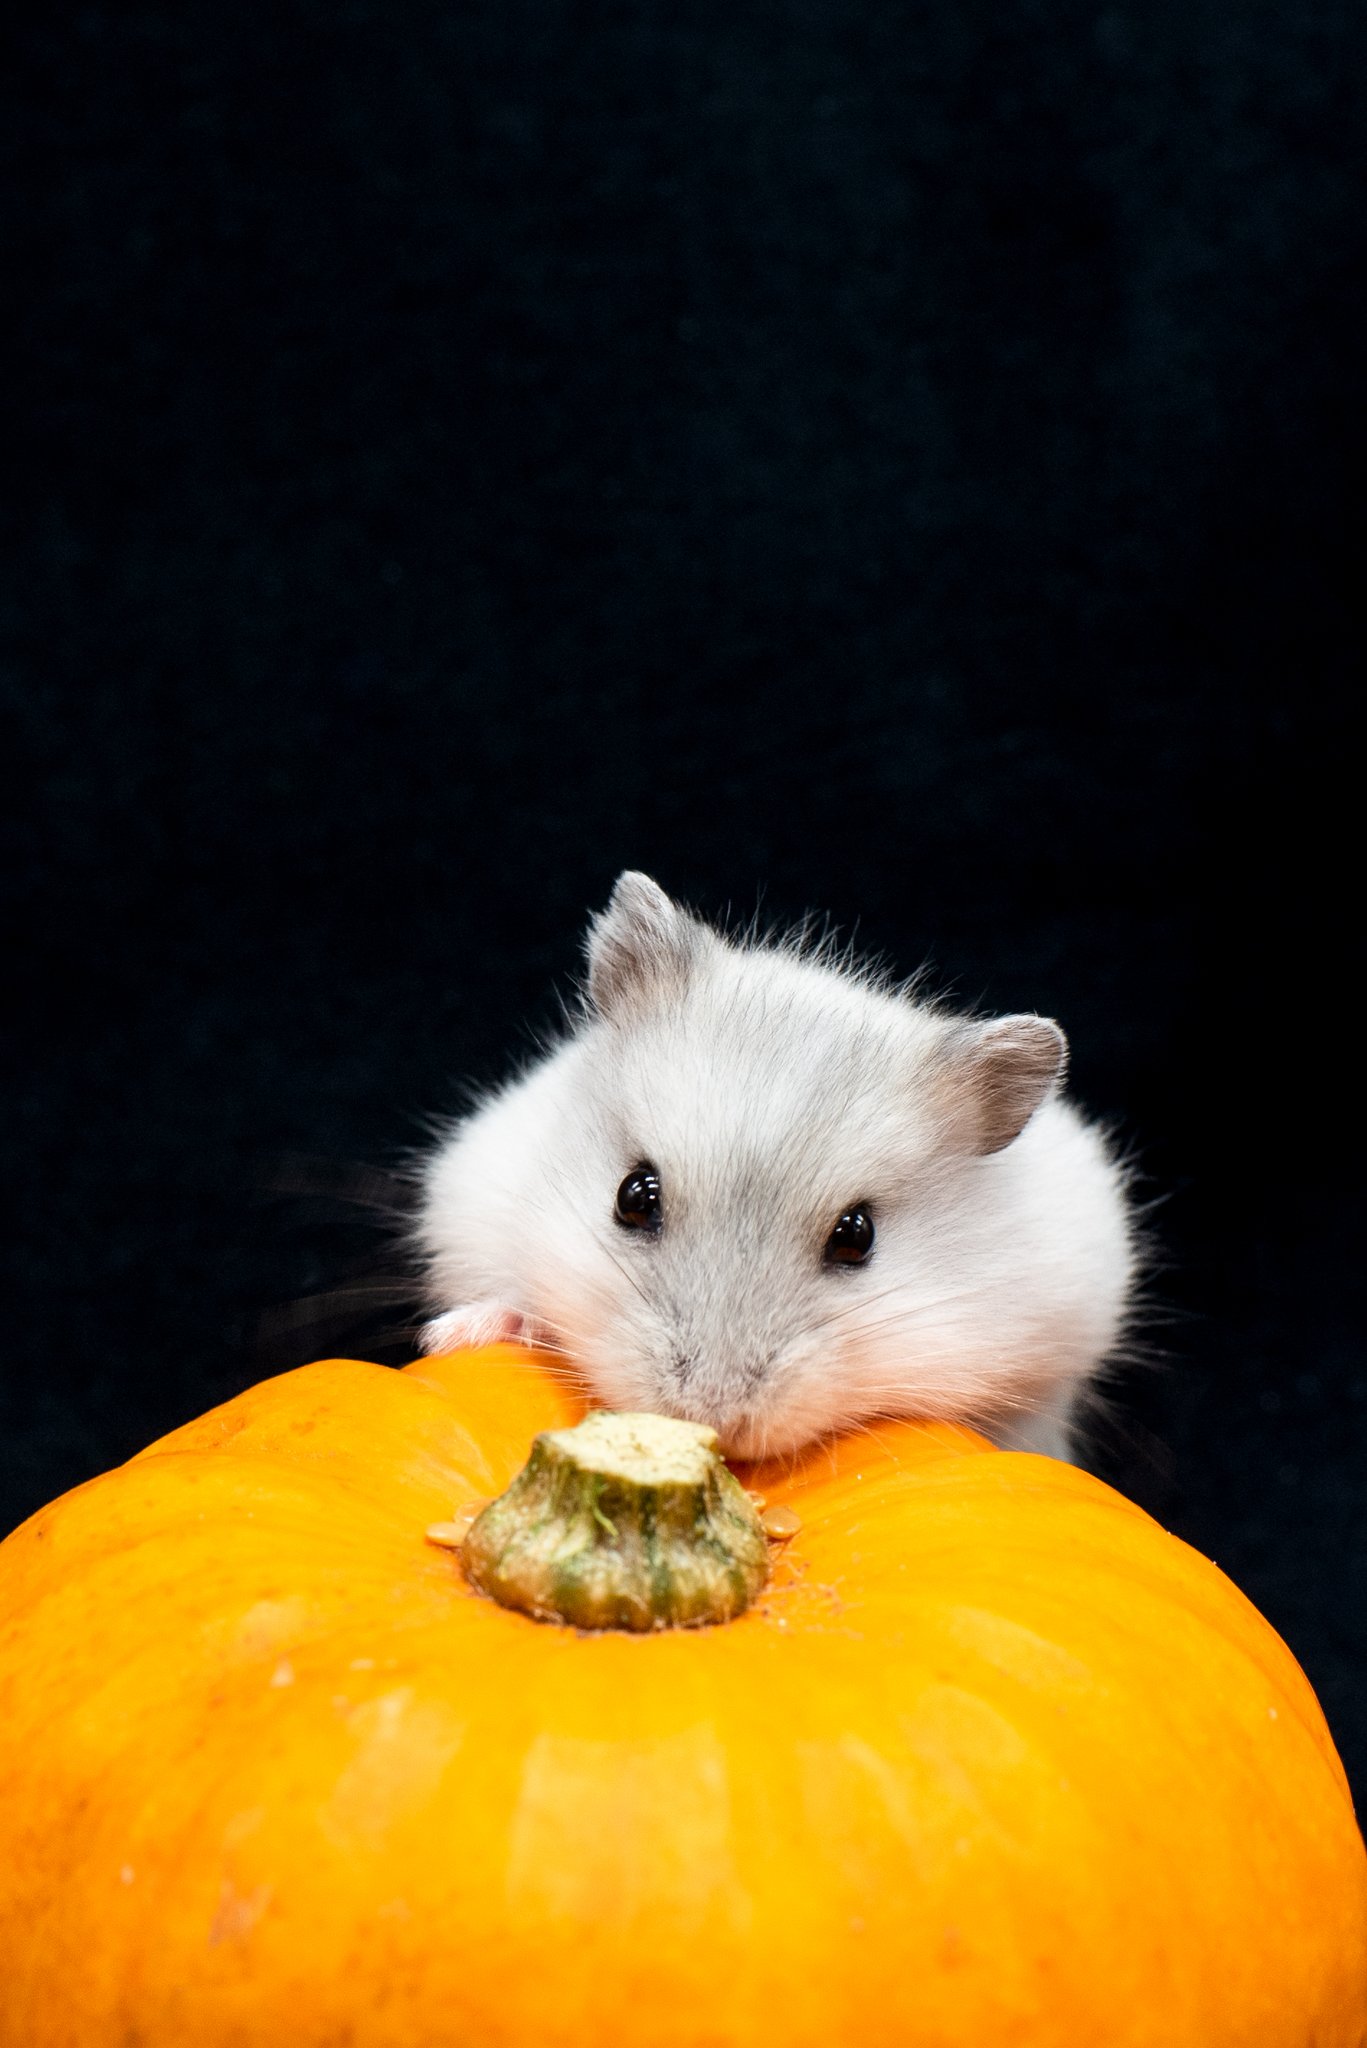  Halloween hamster babies 2021 - © Julie Broadfoot - www.juliebee.co.uk 